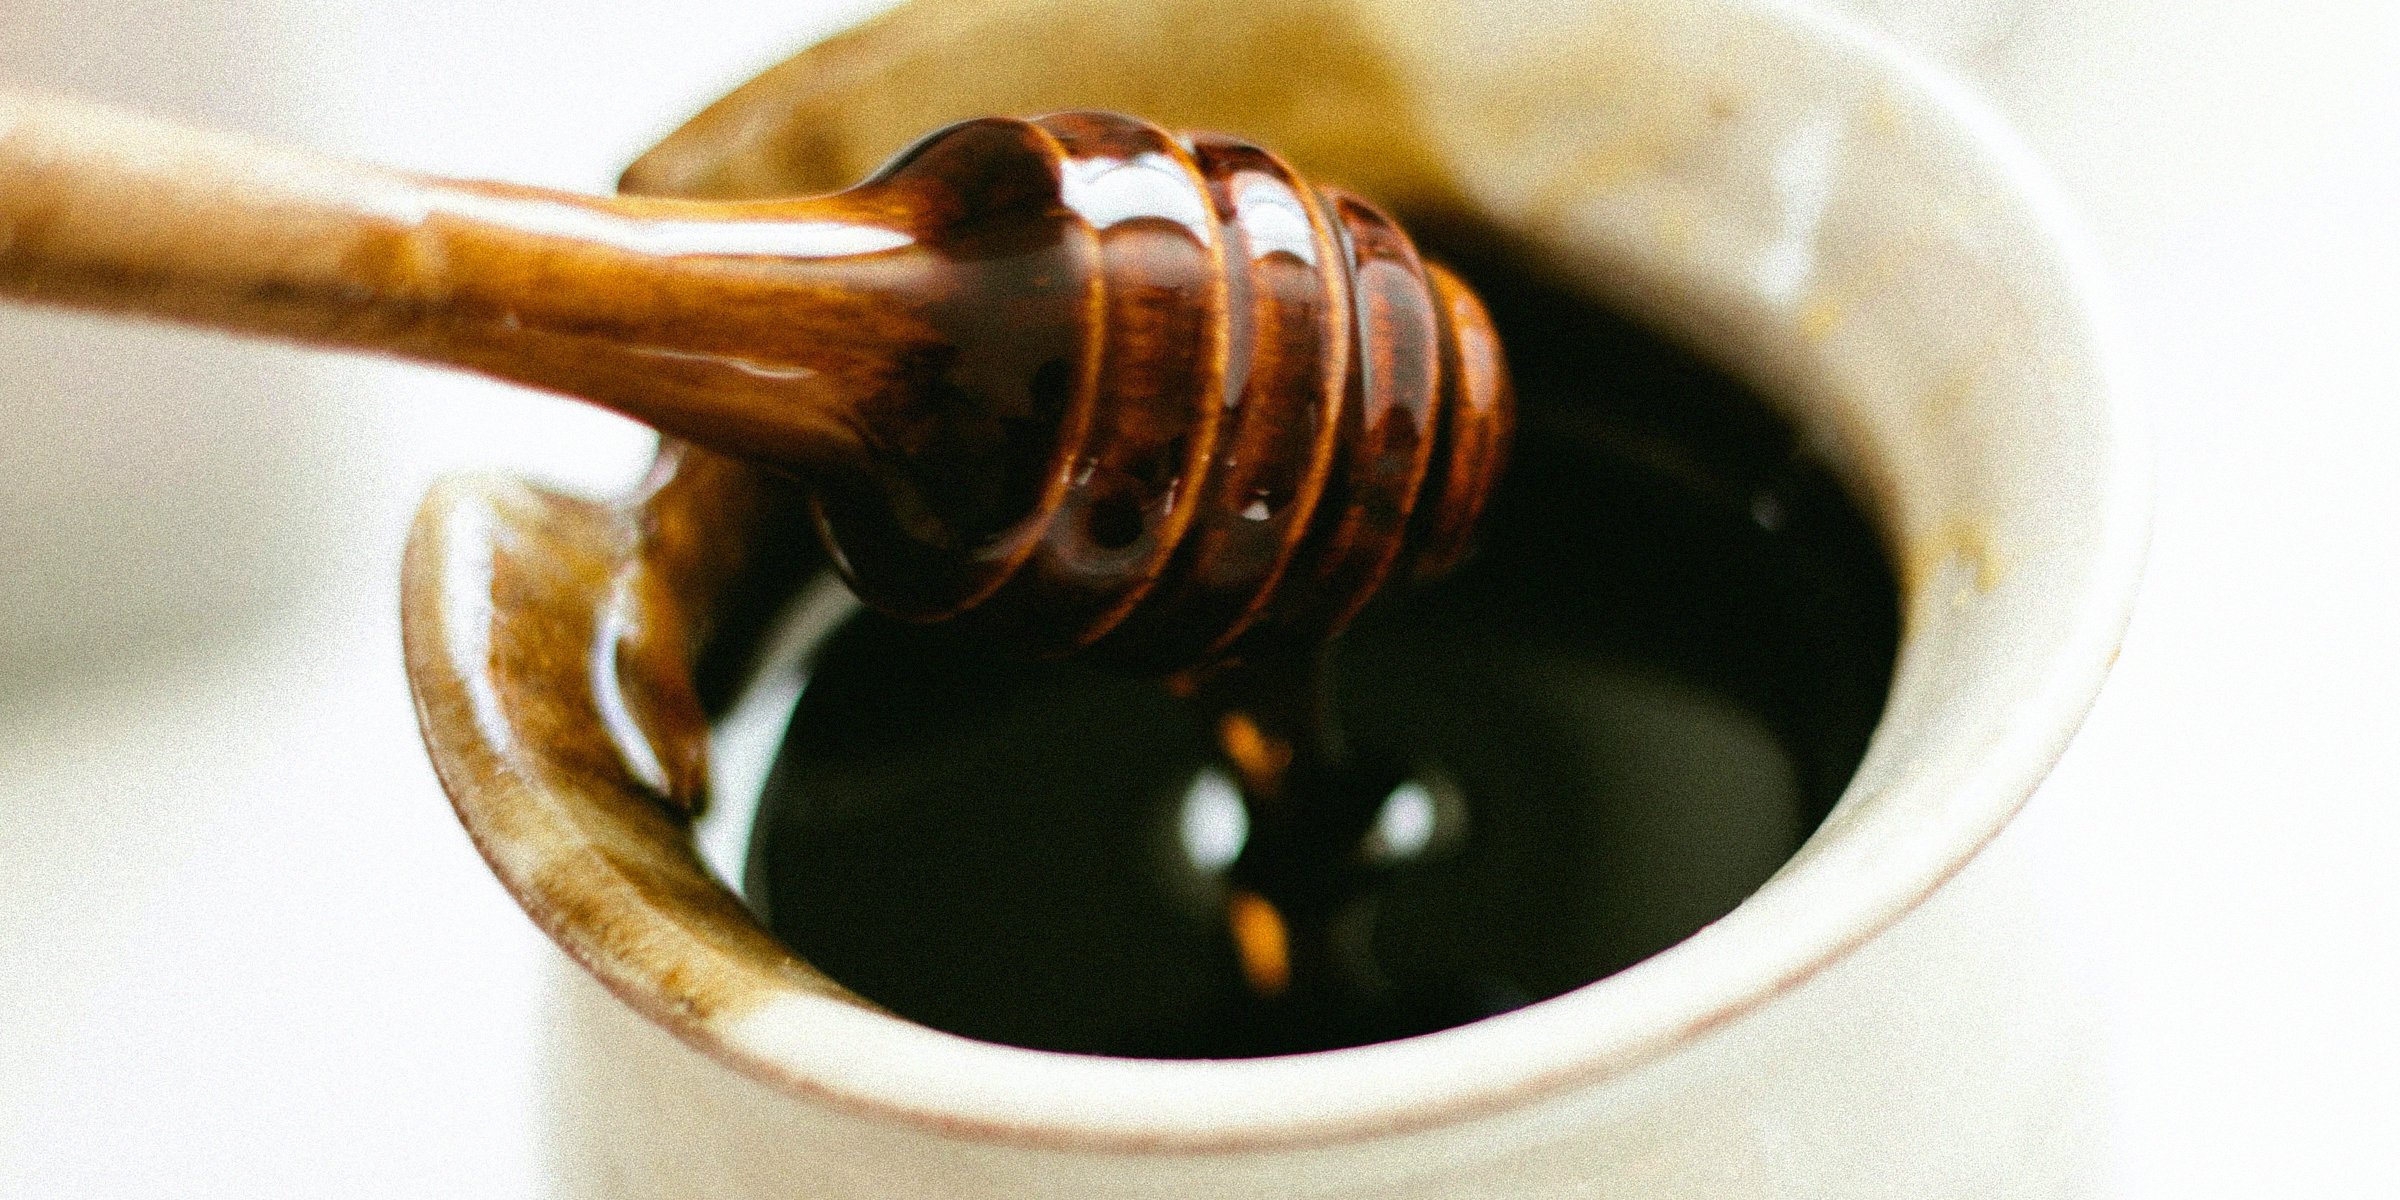 Honey dipper in honey | Source: Unsplash